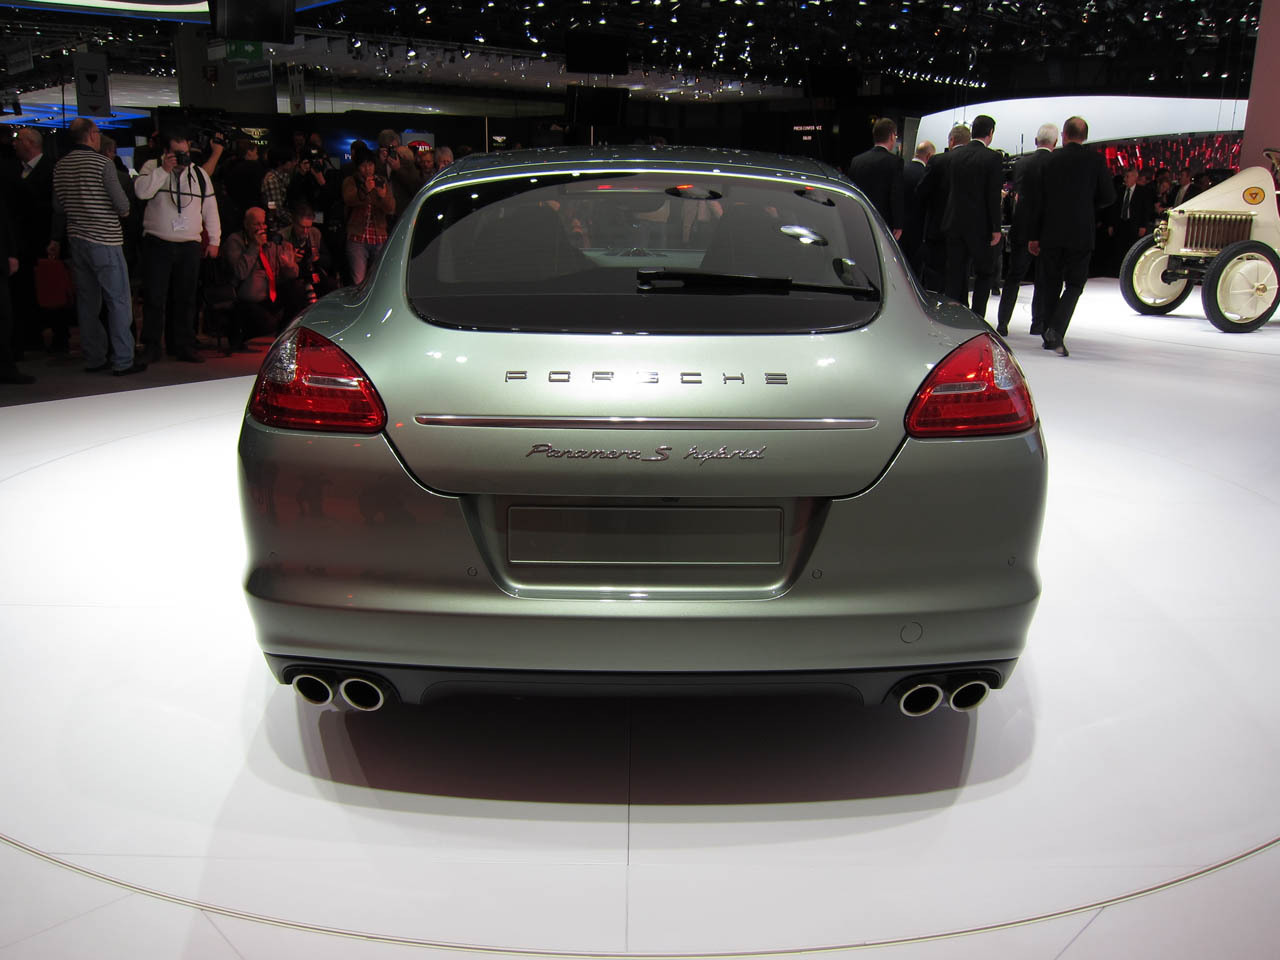 Porsche Panamera S Hybrid - emisii CO2 de 159 g/km